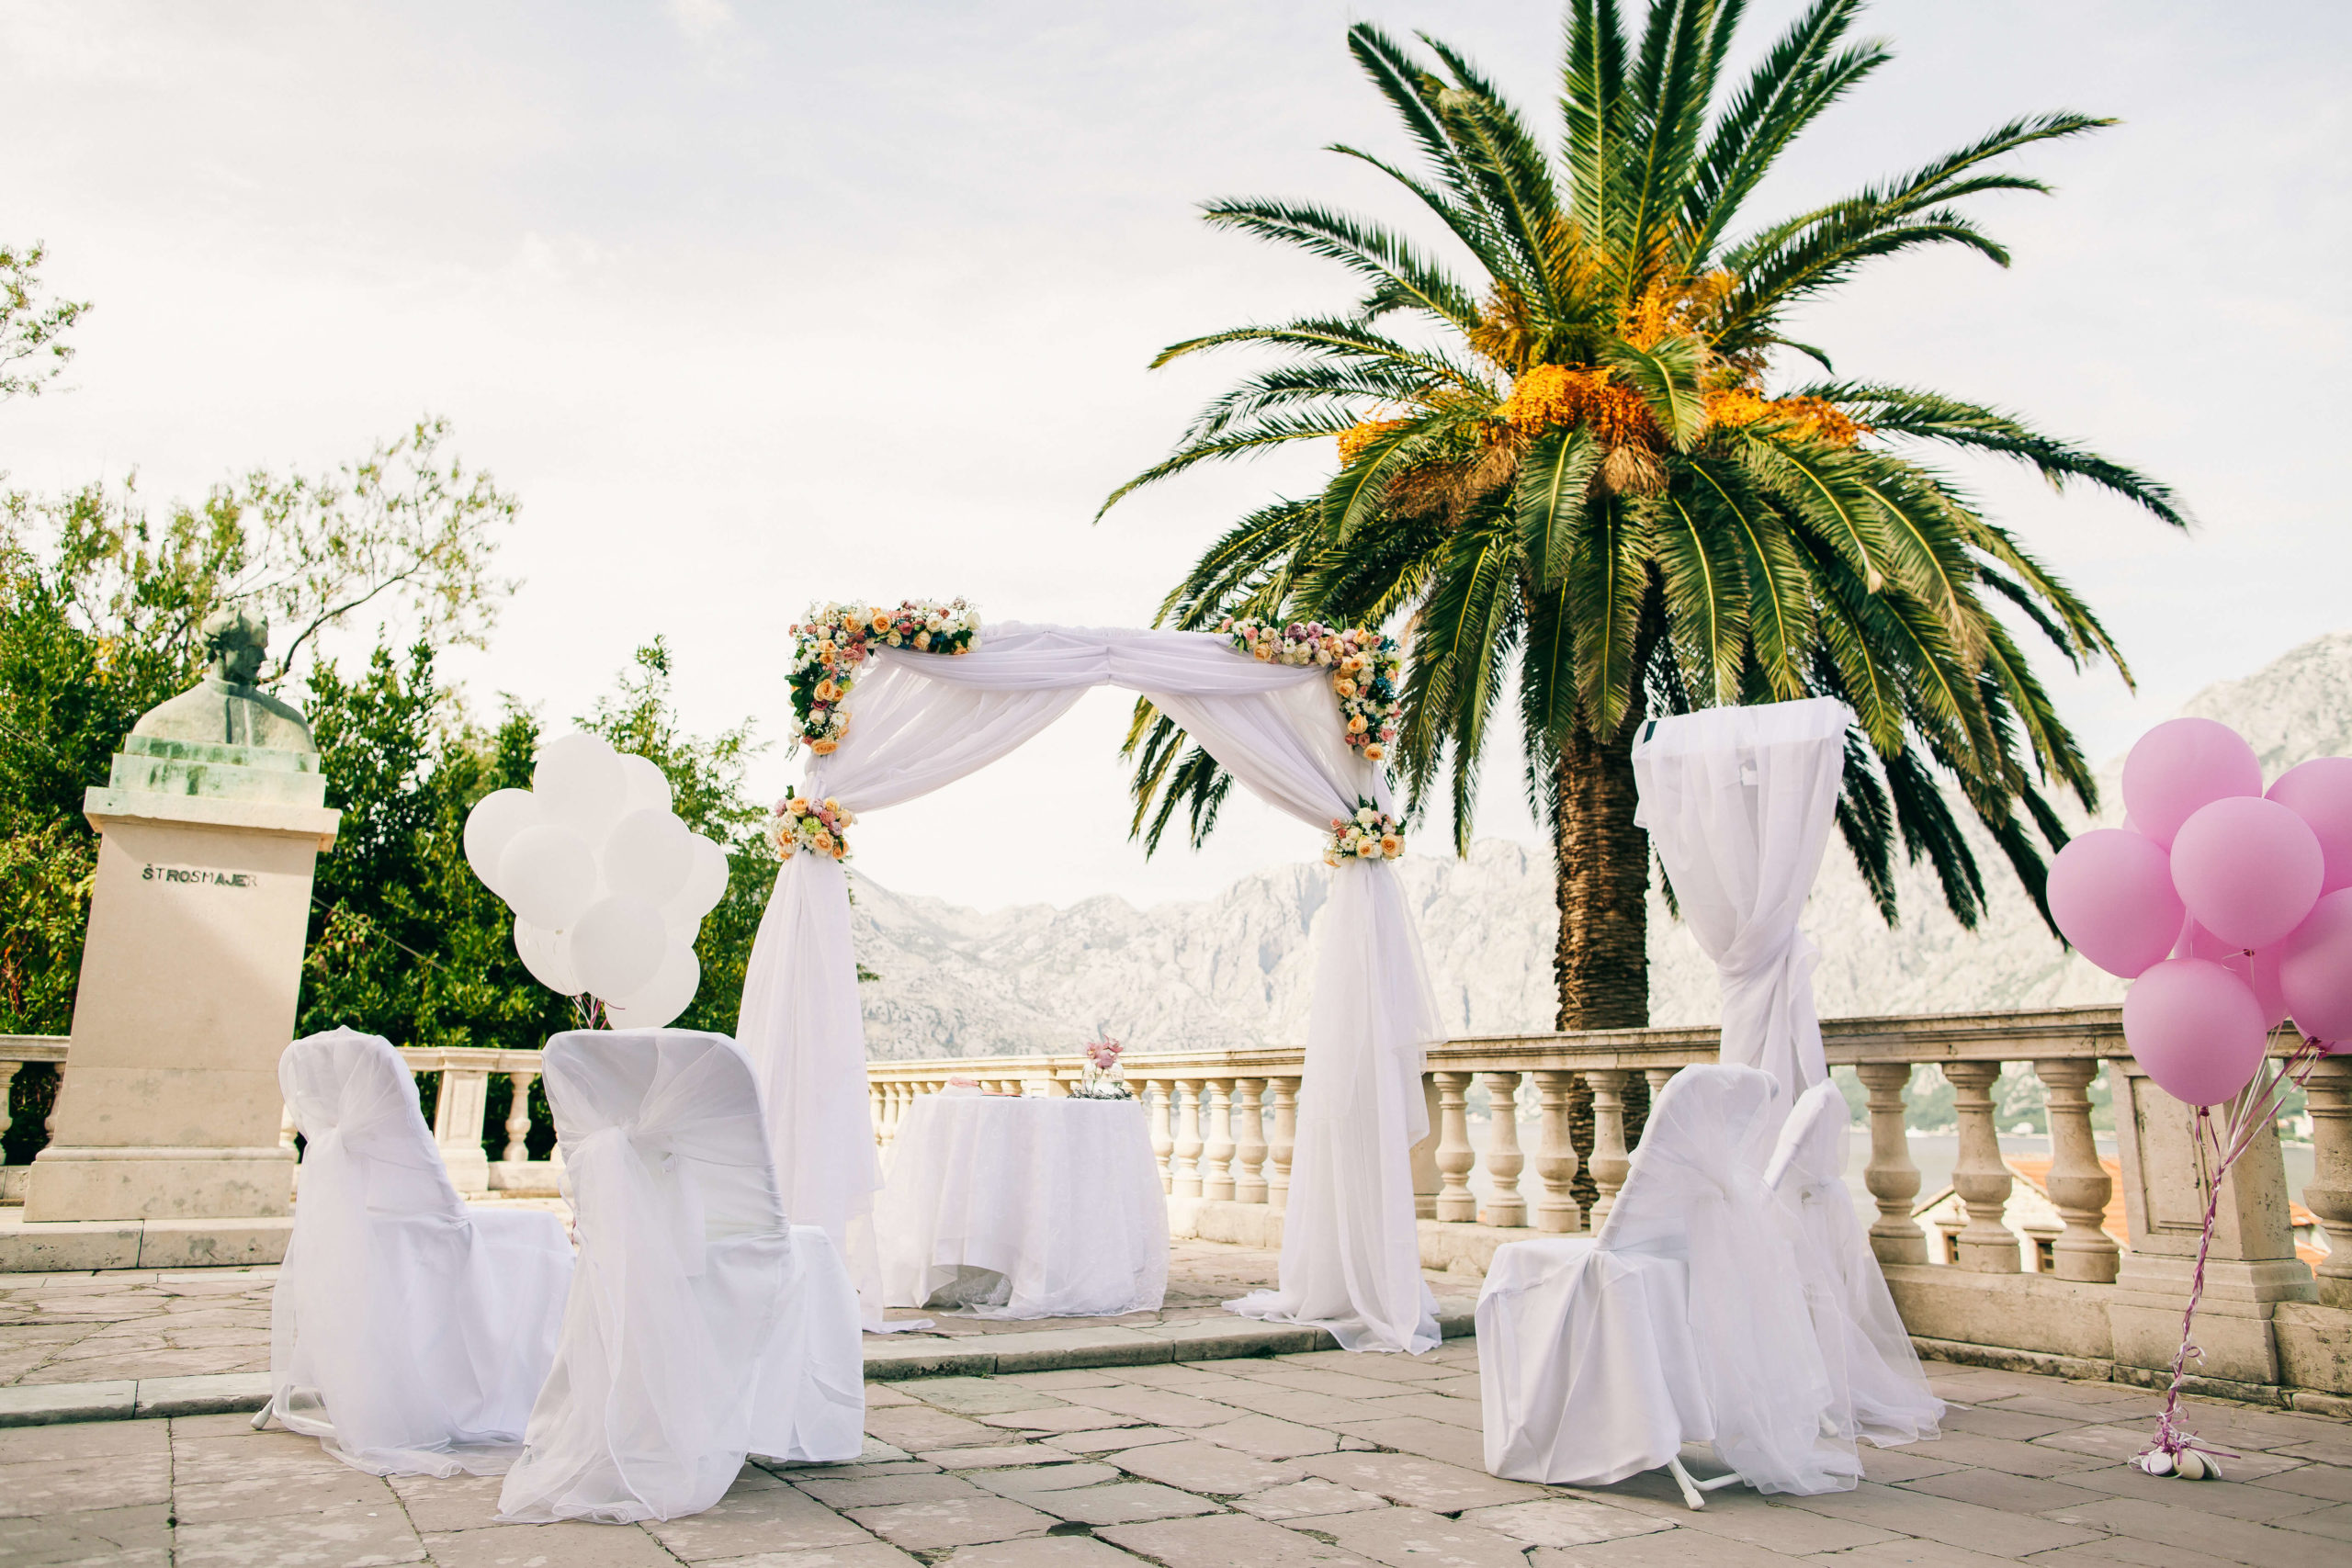 Sunset destination wedding arch on beach white chairs palm trees